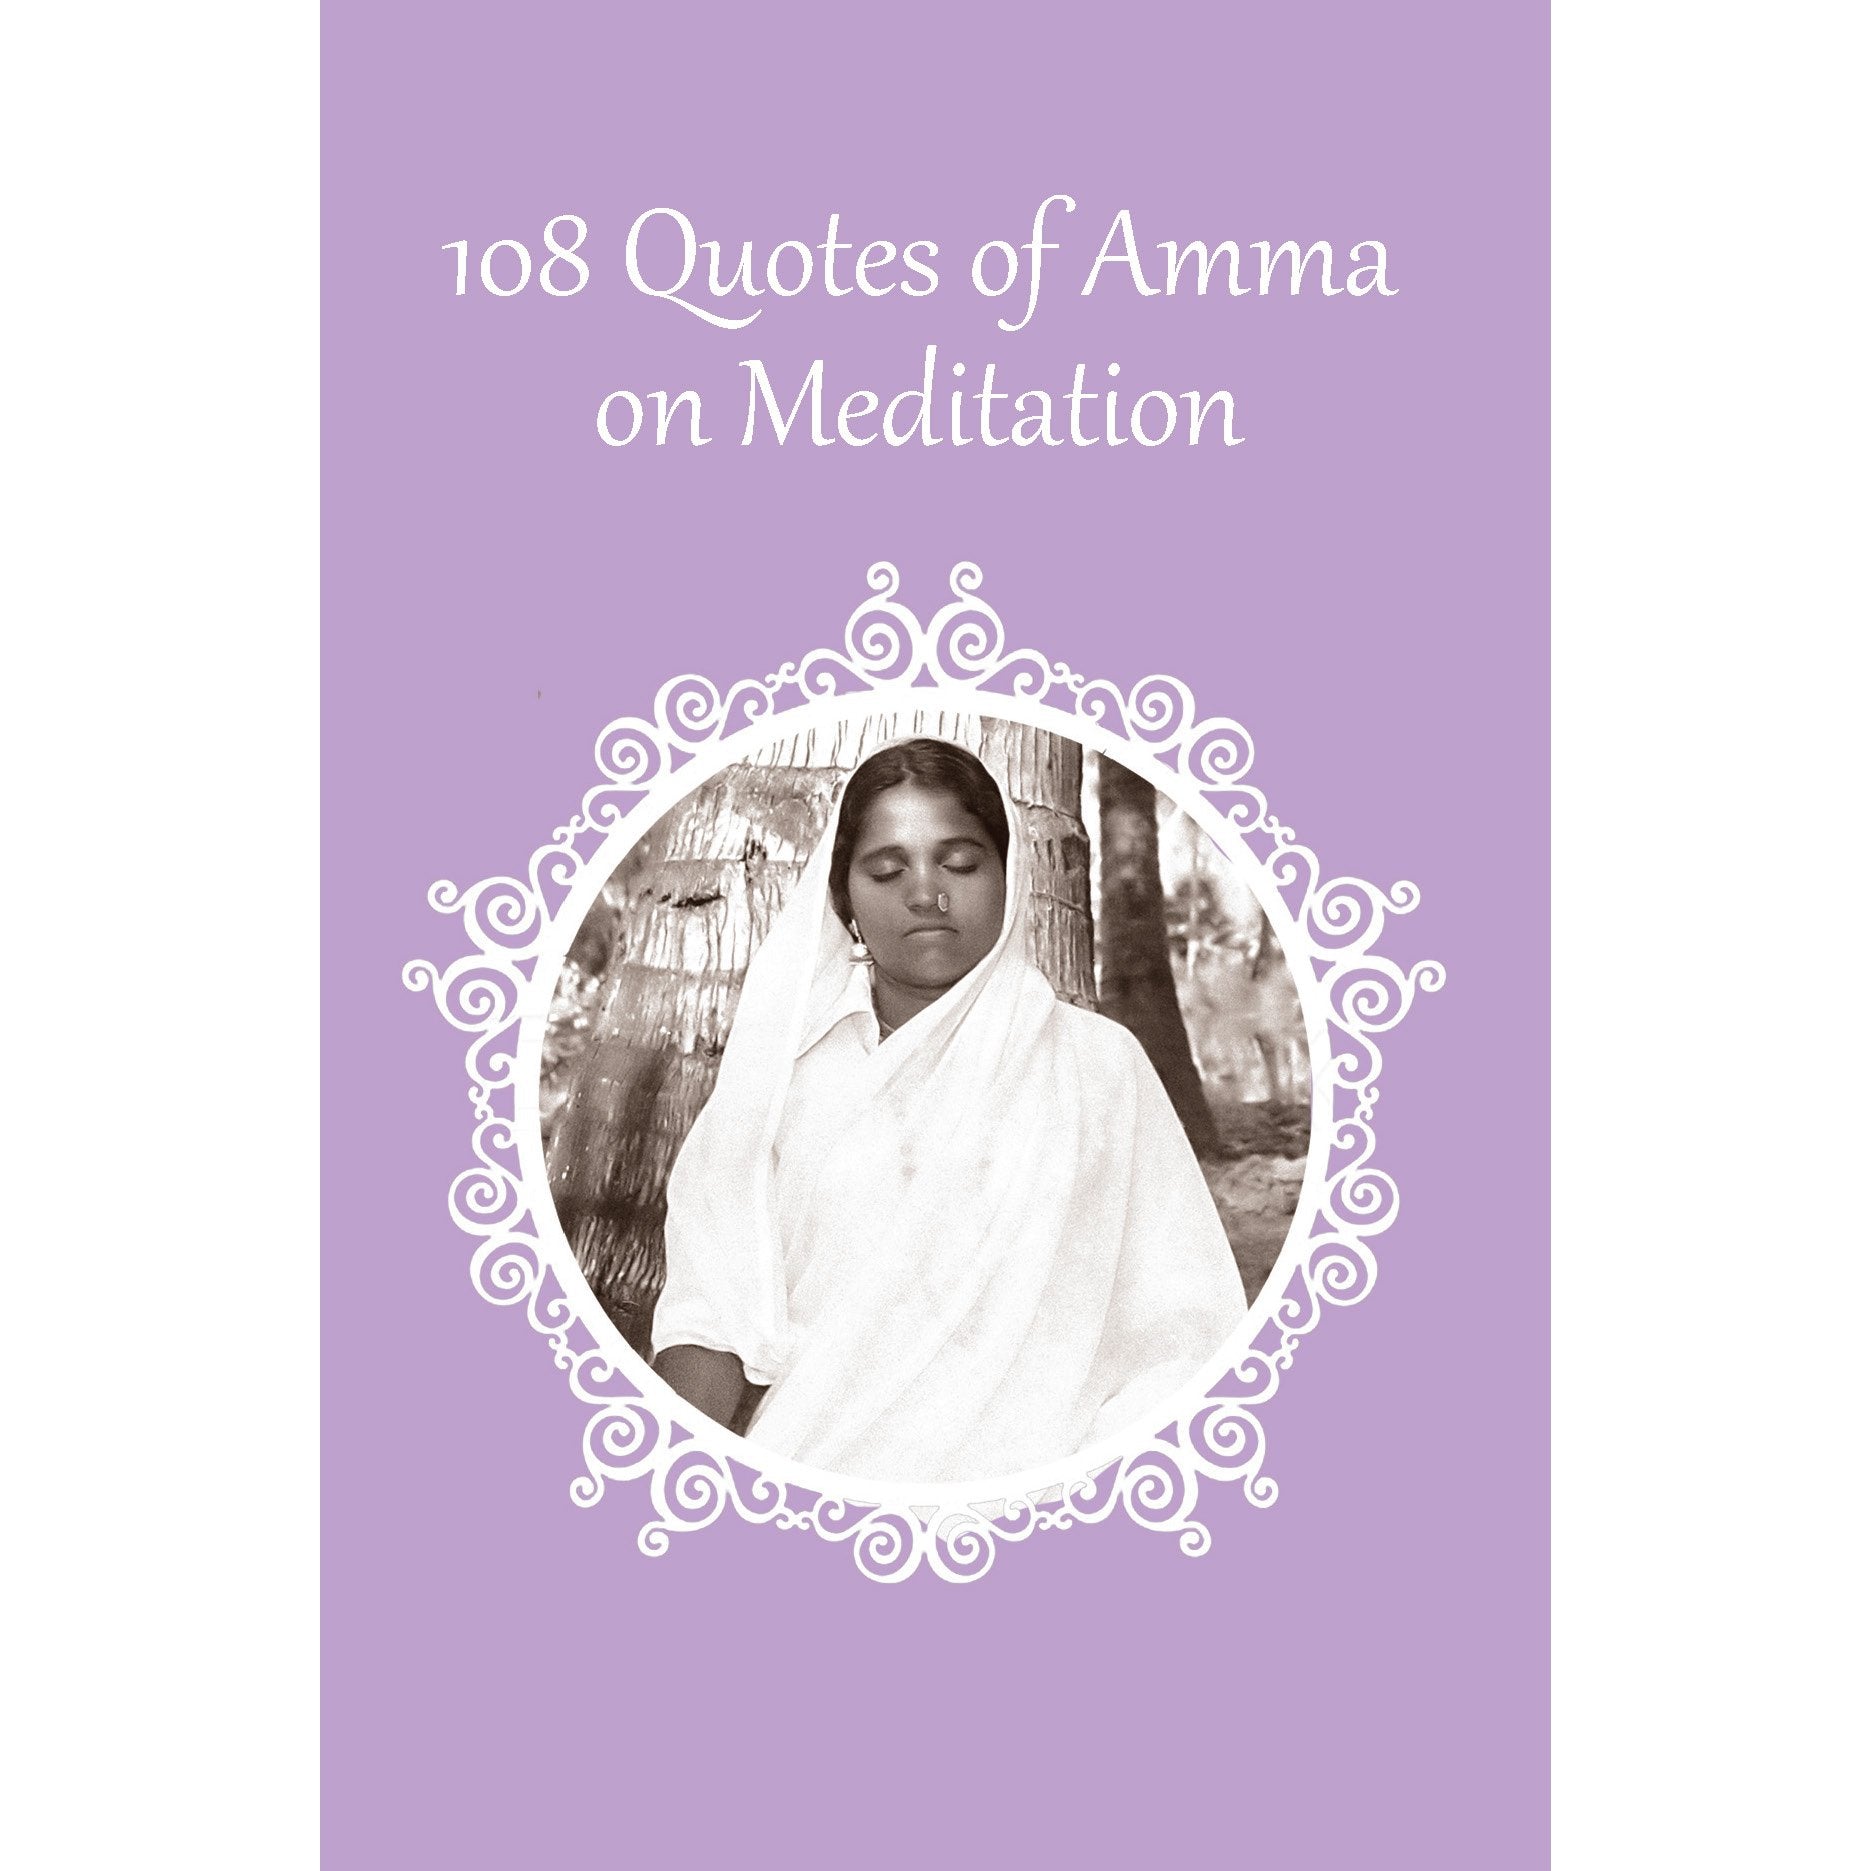 108 Quotes on Meditation